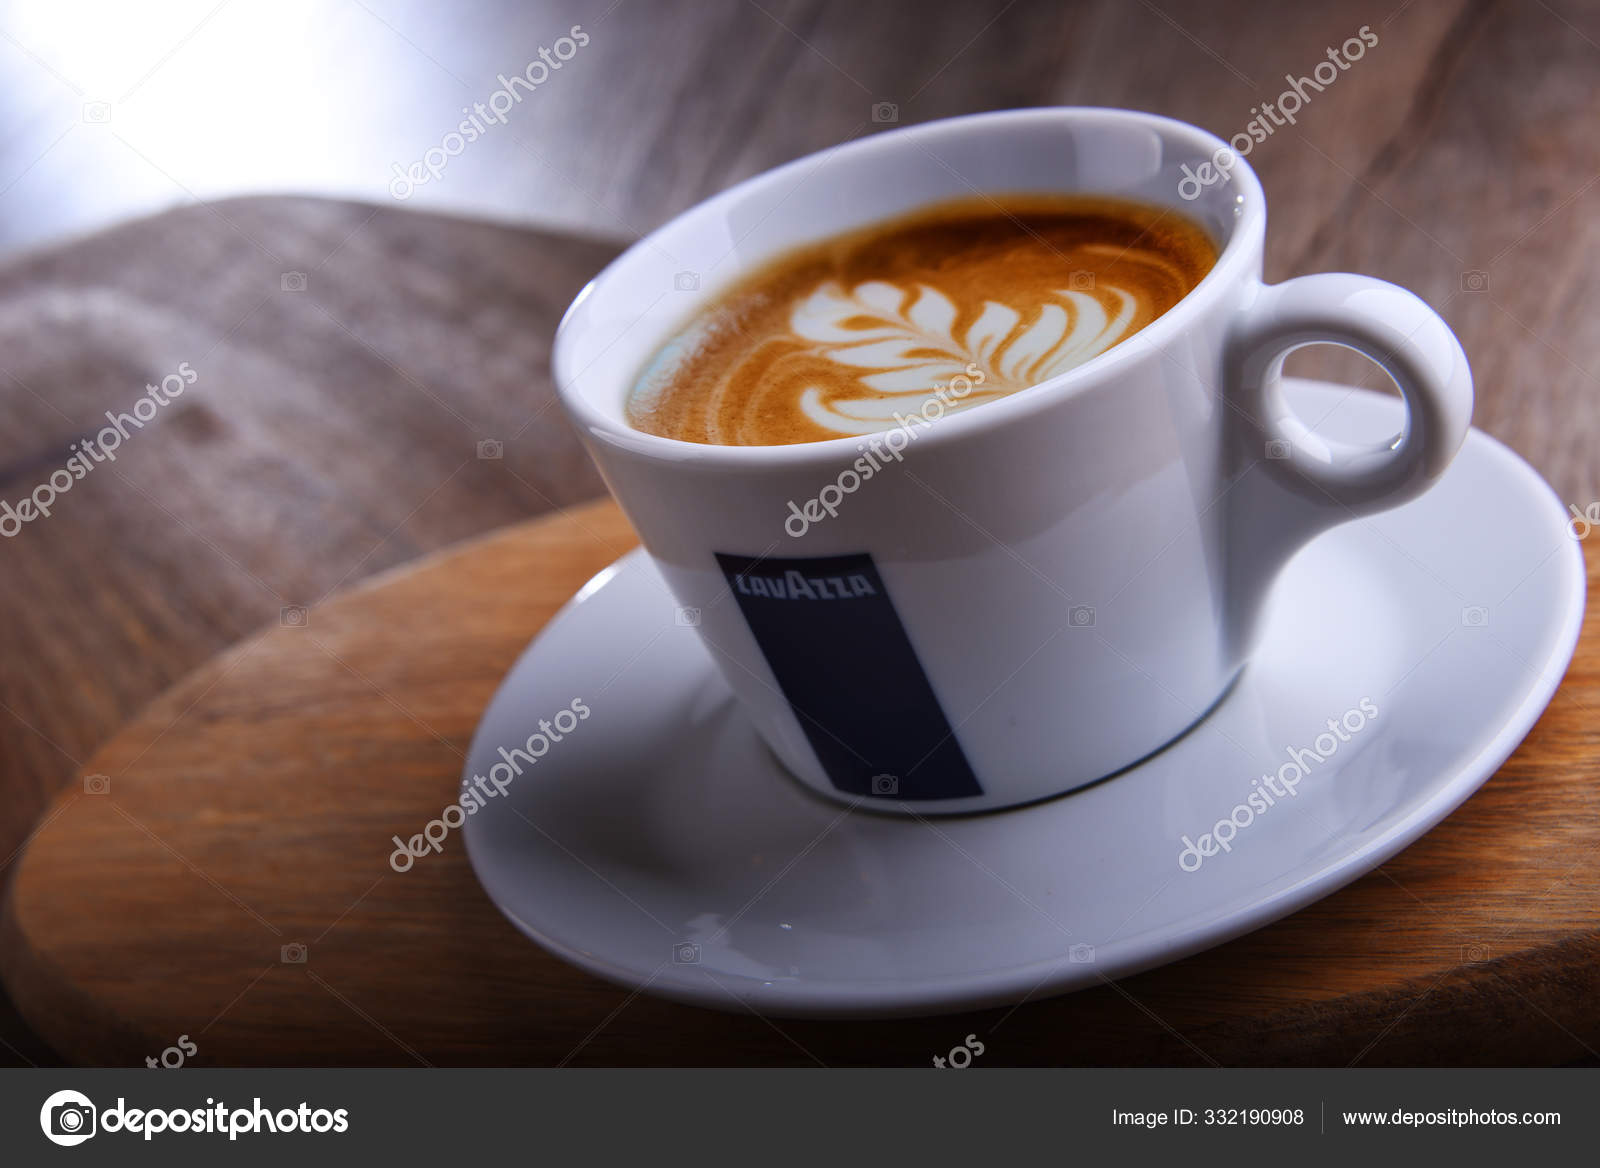 https://st3.depositphotos.com/1063437/33219/i/1600/depositphotos_332190908-stock-photo-cup-of-lavazza-coffee.jpg